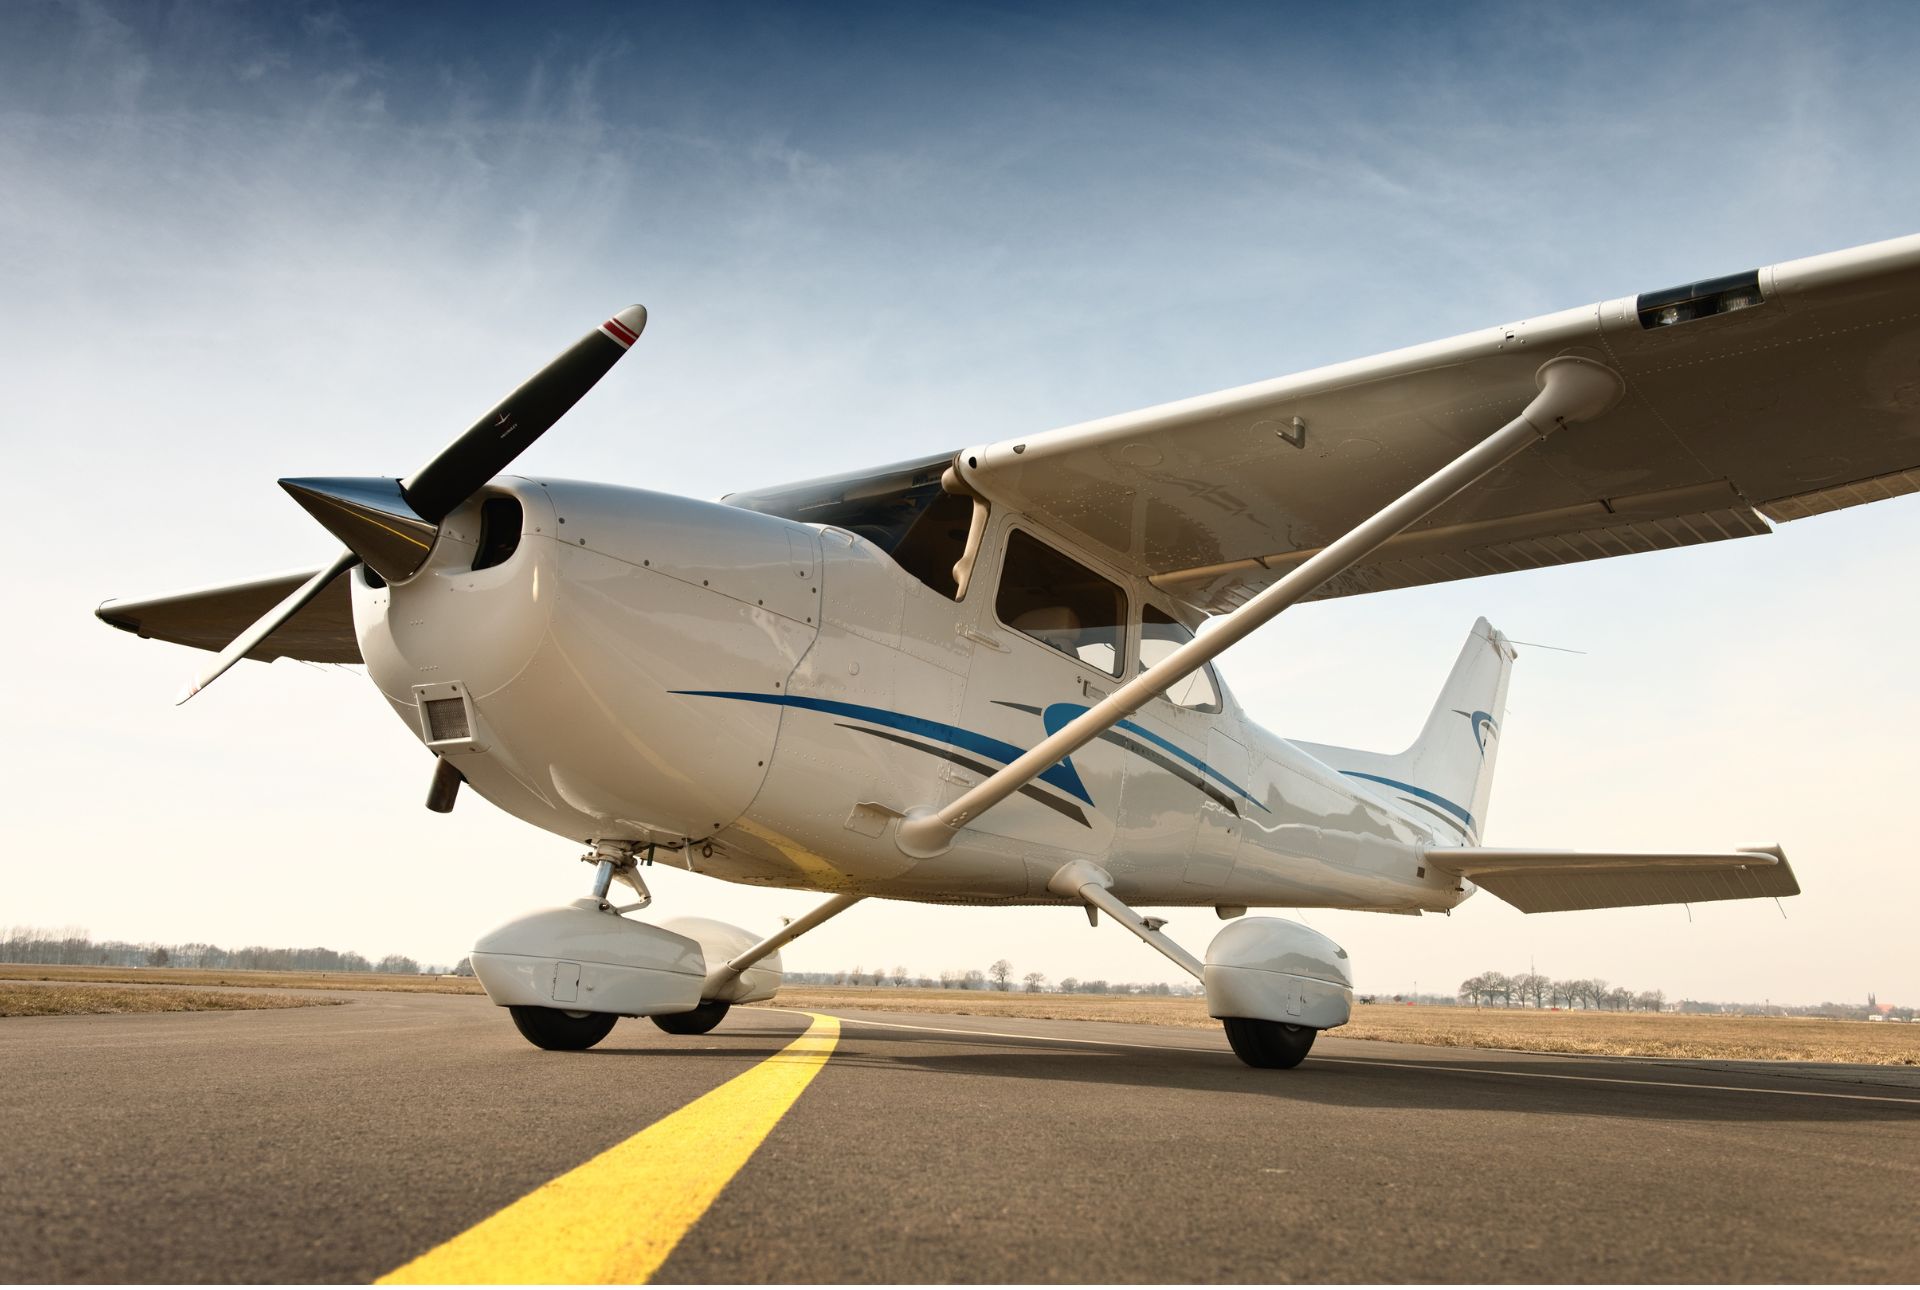 Cessna 172 parked on tarmac runway